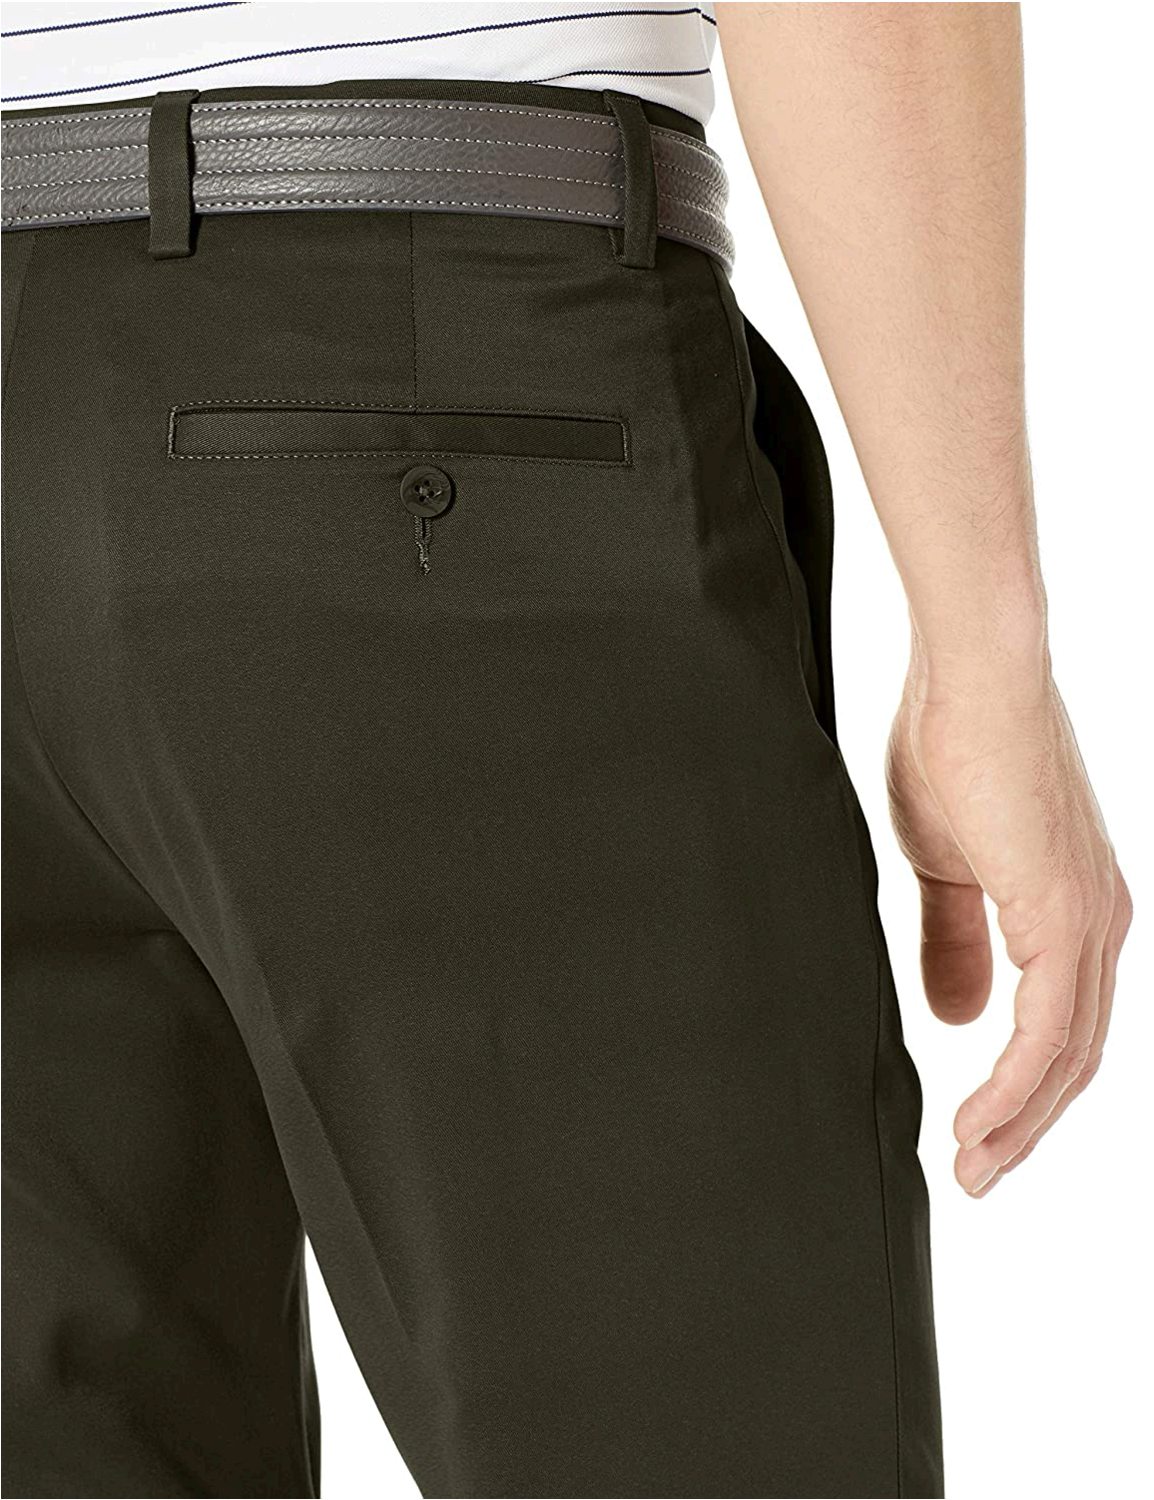 Essentials Men's Slim-Fit Stretch Golf Pant, Stone, 35W x 34L | eBay